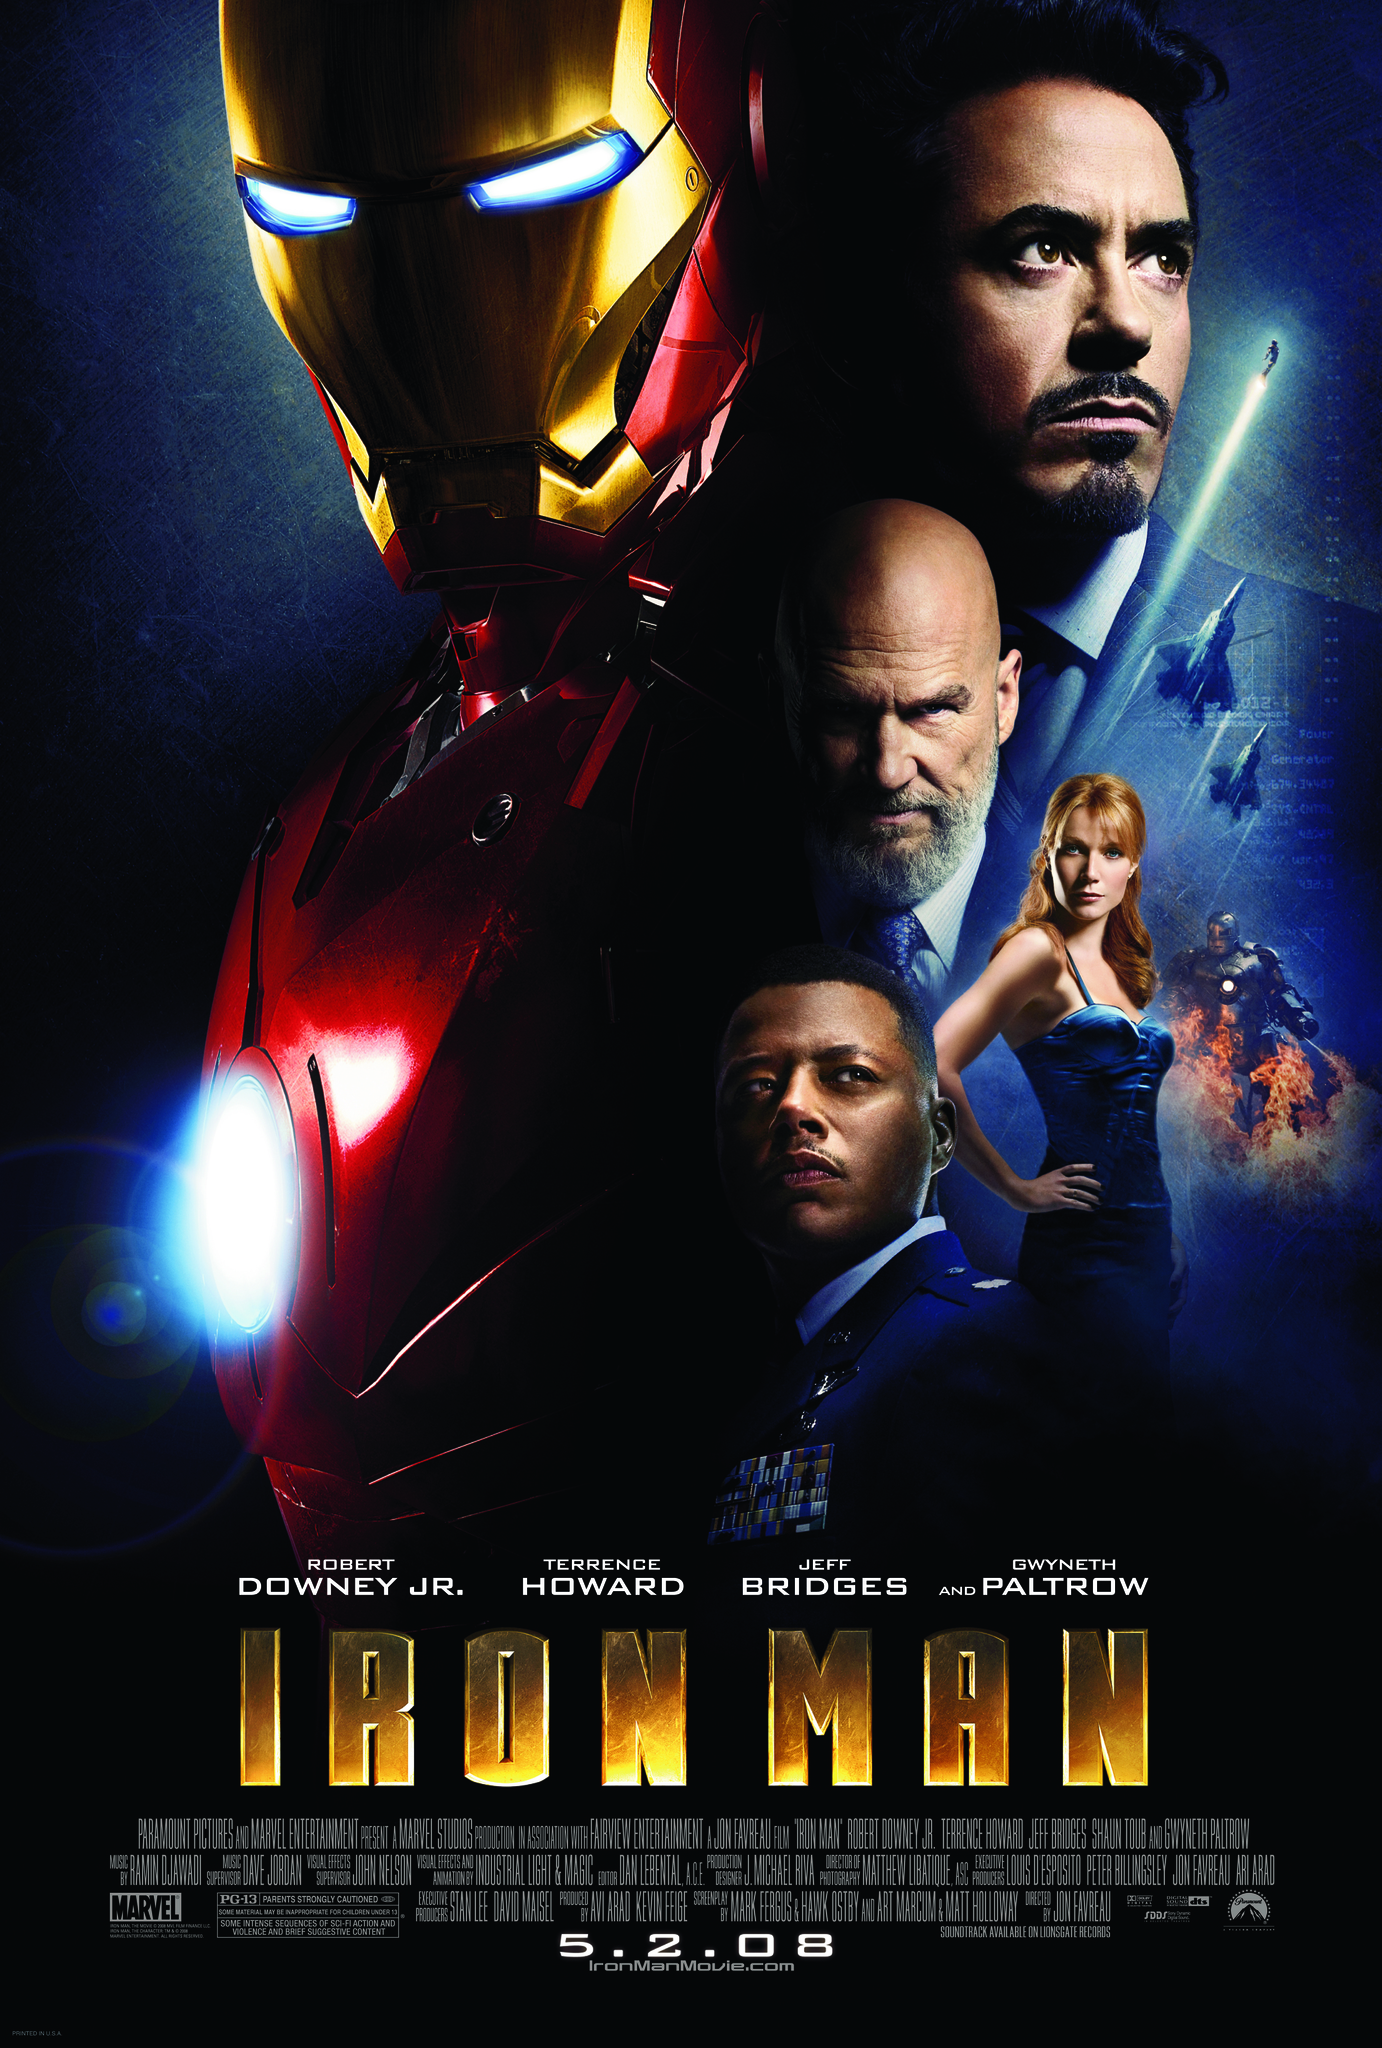 Iron Man & Hulk Heroes United (2013) ไอร่อนแมน แอนด์ ฮัลค์ ฮีโร่ส์ ยูไนเต็ด Robert Downey Jr.